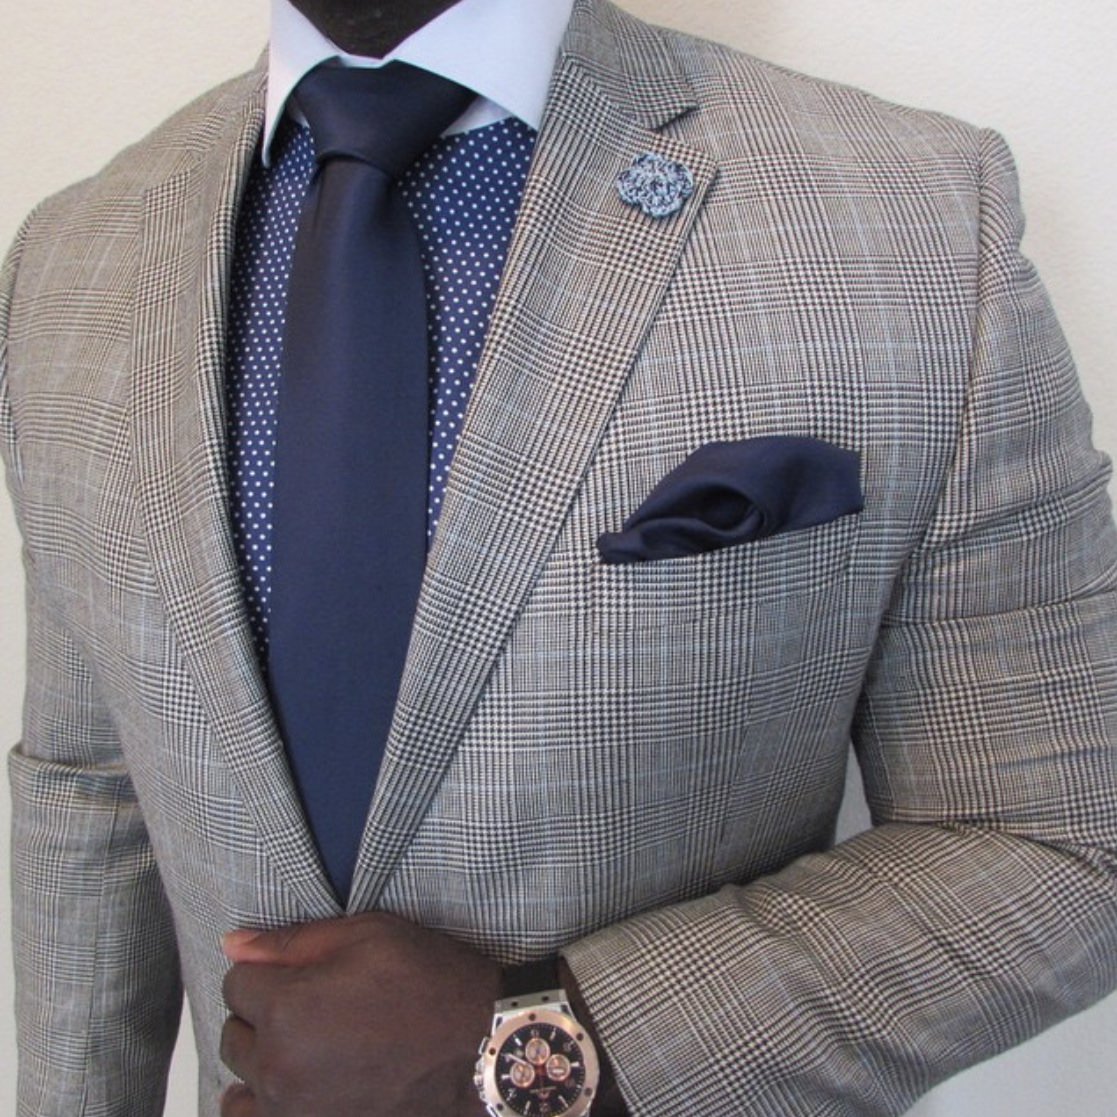 Porsamo Bleu Marcus luxury chronograph men's watch, silicone strap, rose, silver, black 651DMAR